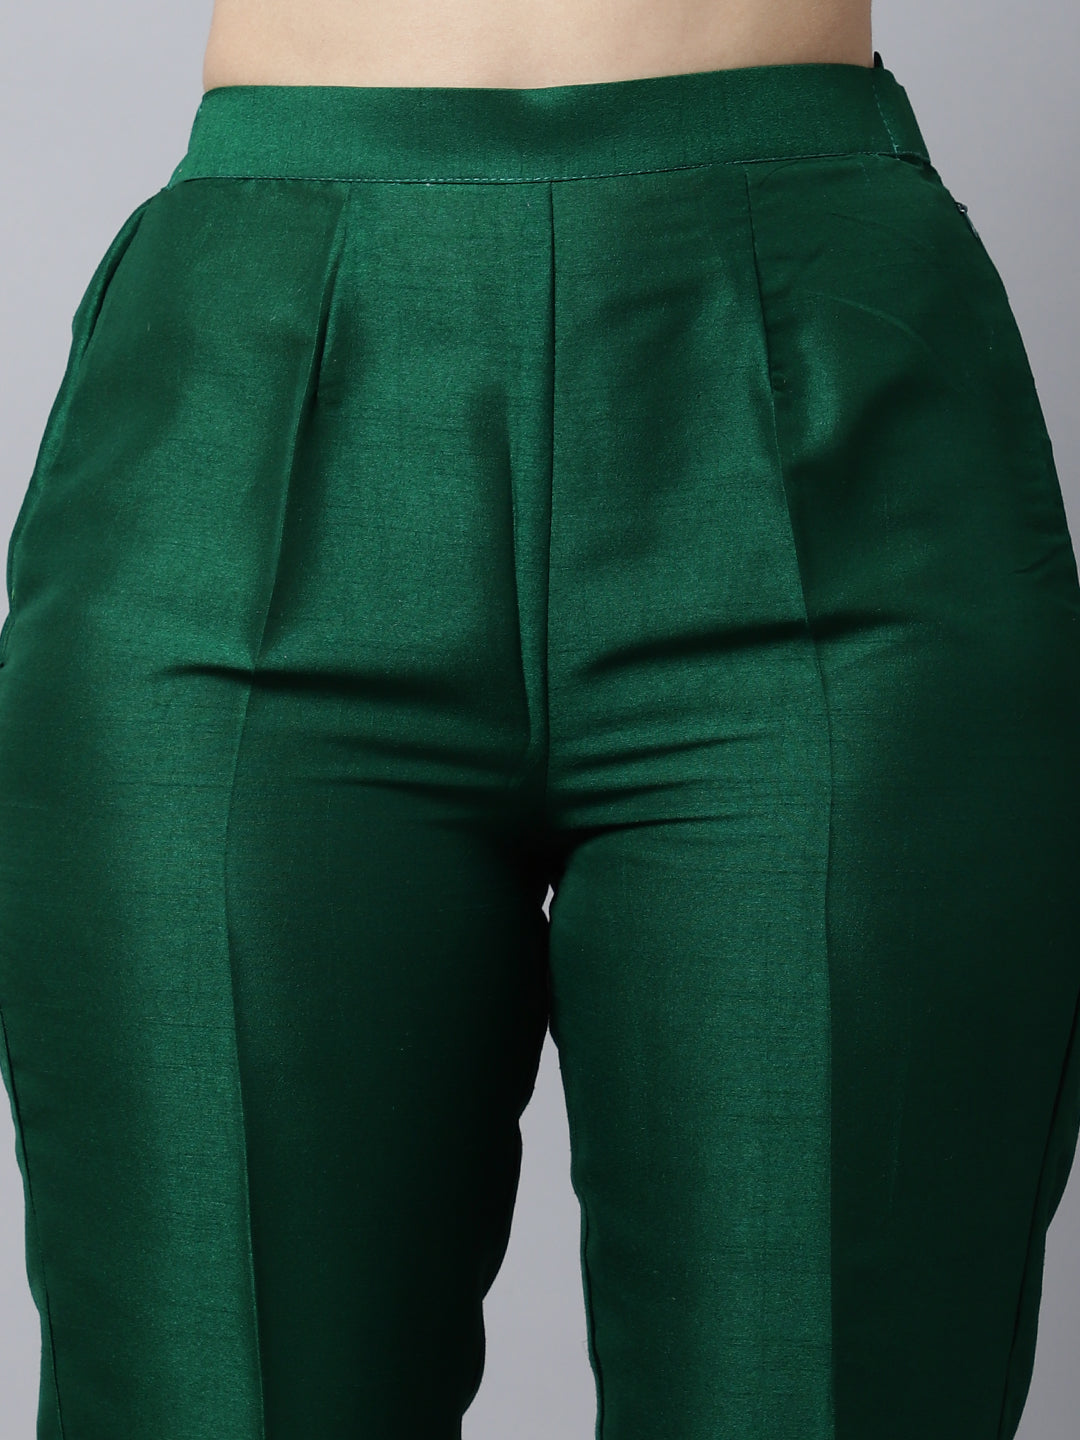 Women's Sizzling Green Kurti With Pants And Printed Dupatta - Anokherang